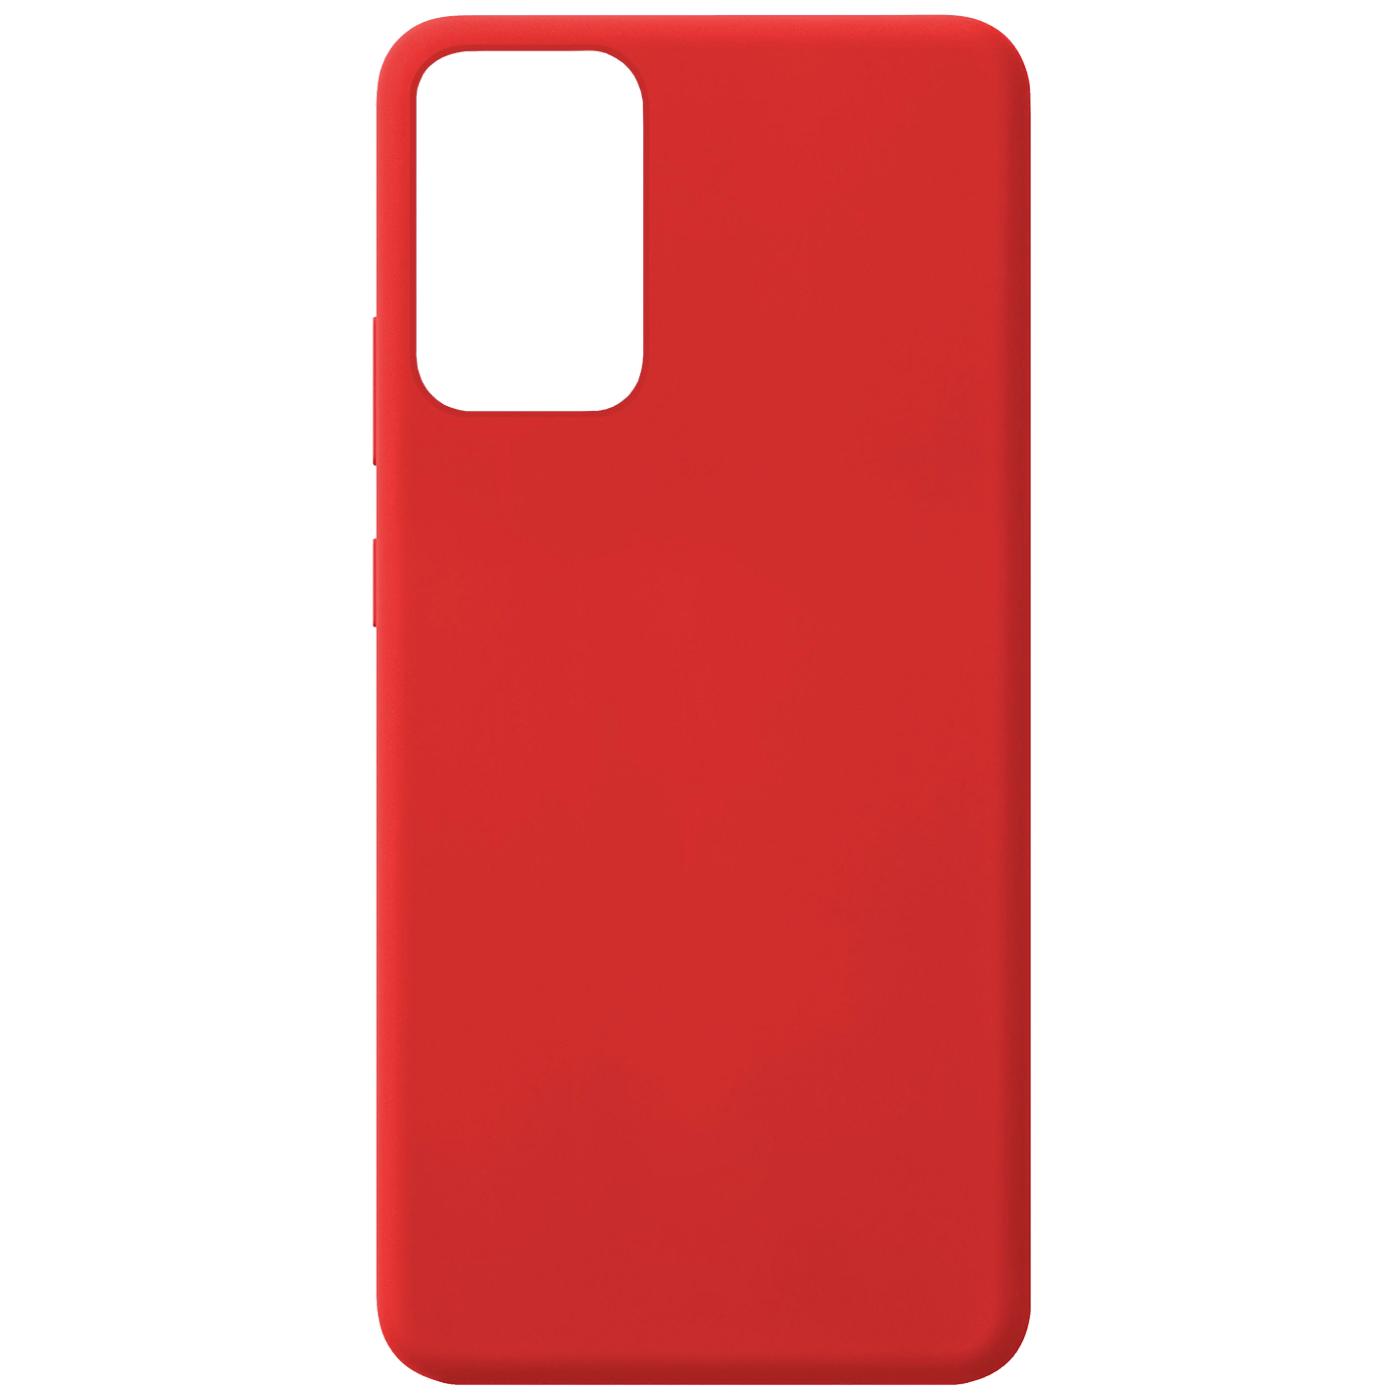 Futrola za mobitel Samsung A72, crvena